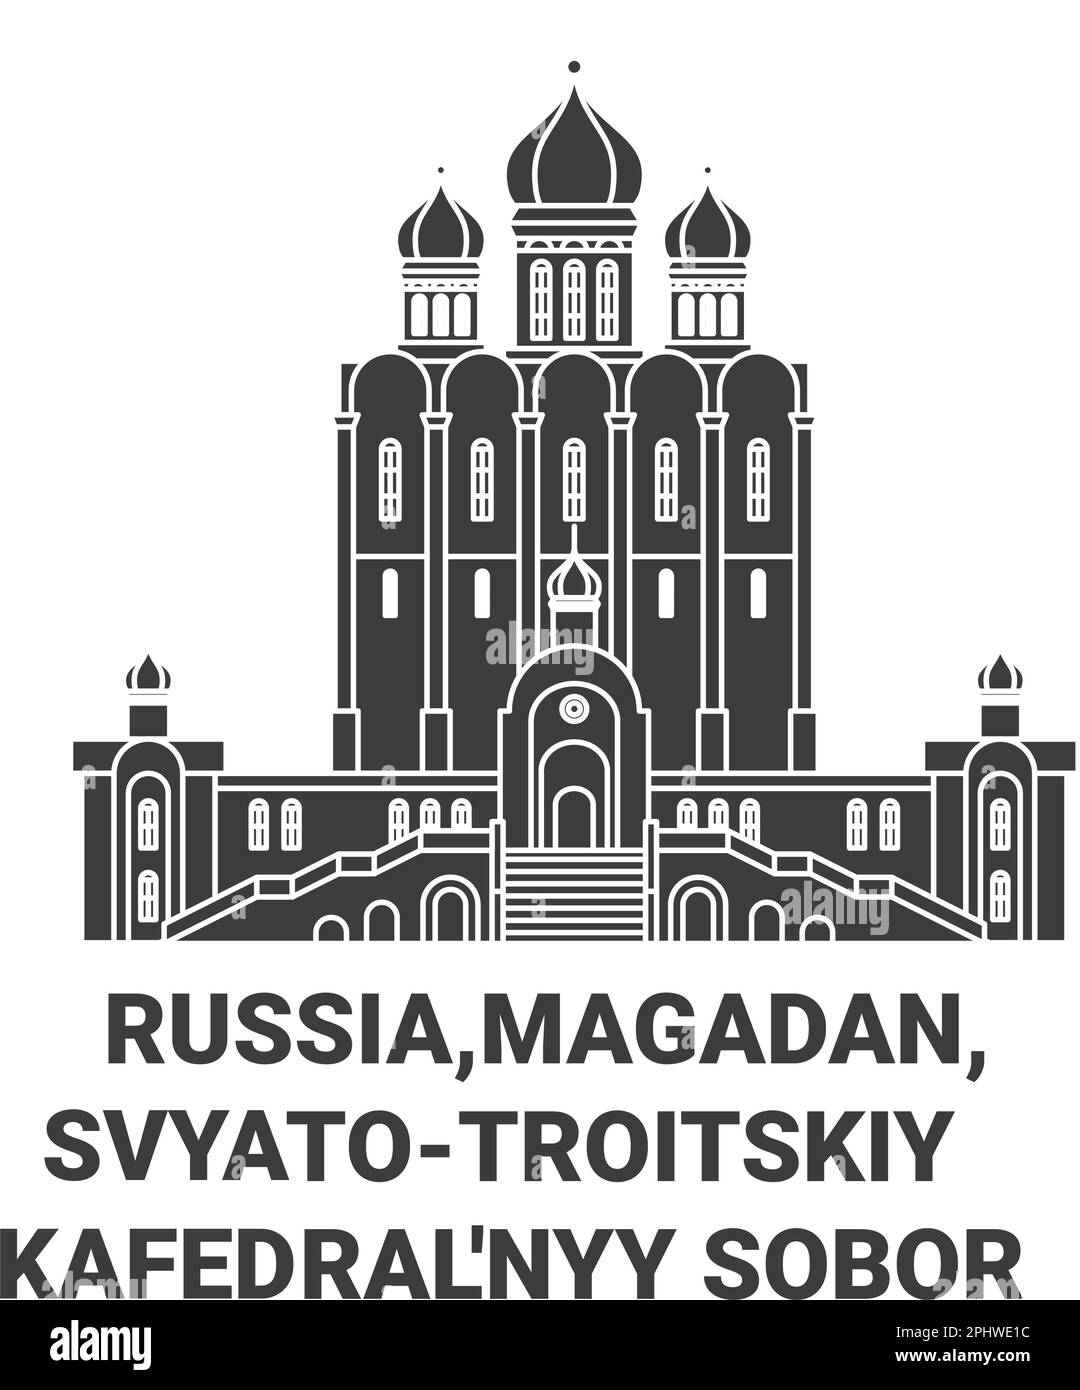 Russia, Magadan, Svyato, Troitskiy Kafedral'nyy Sobor viaggio punto di riferimento vettoriale illustrazione Illustrazione Vettoriale